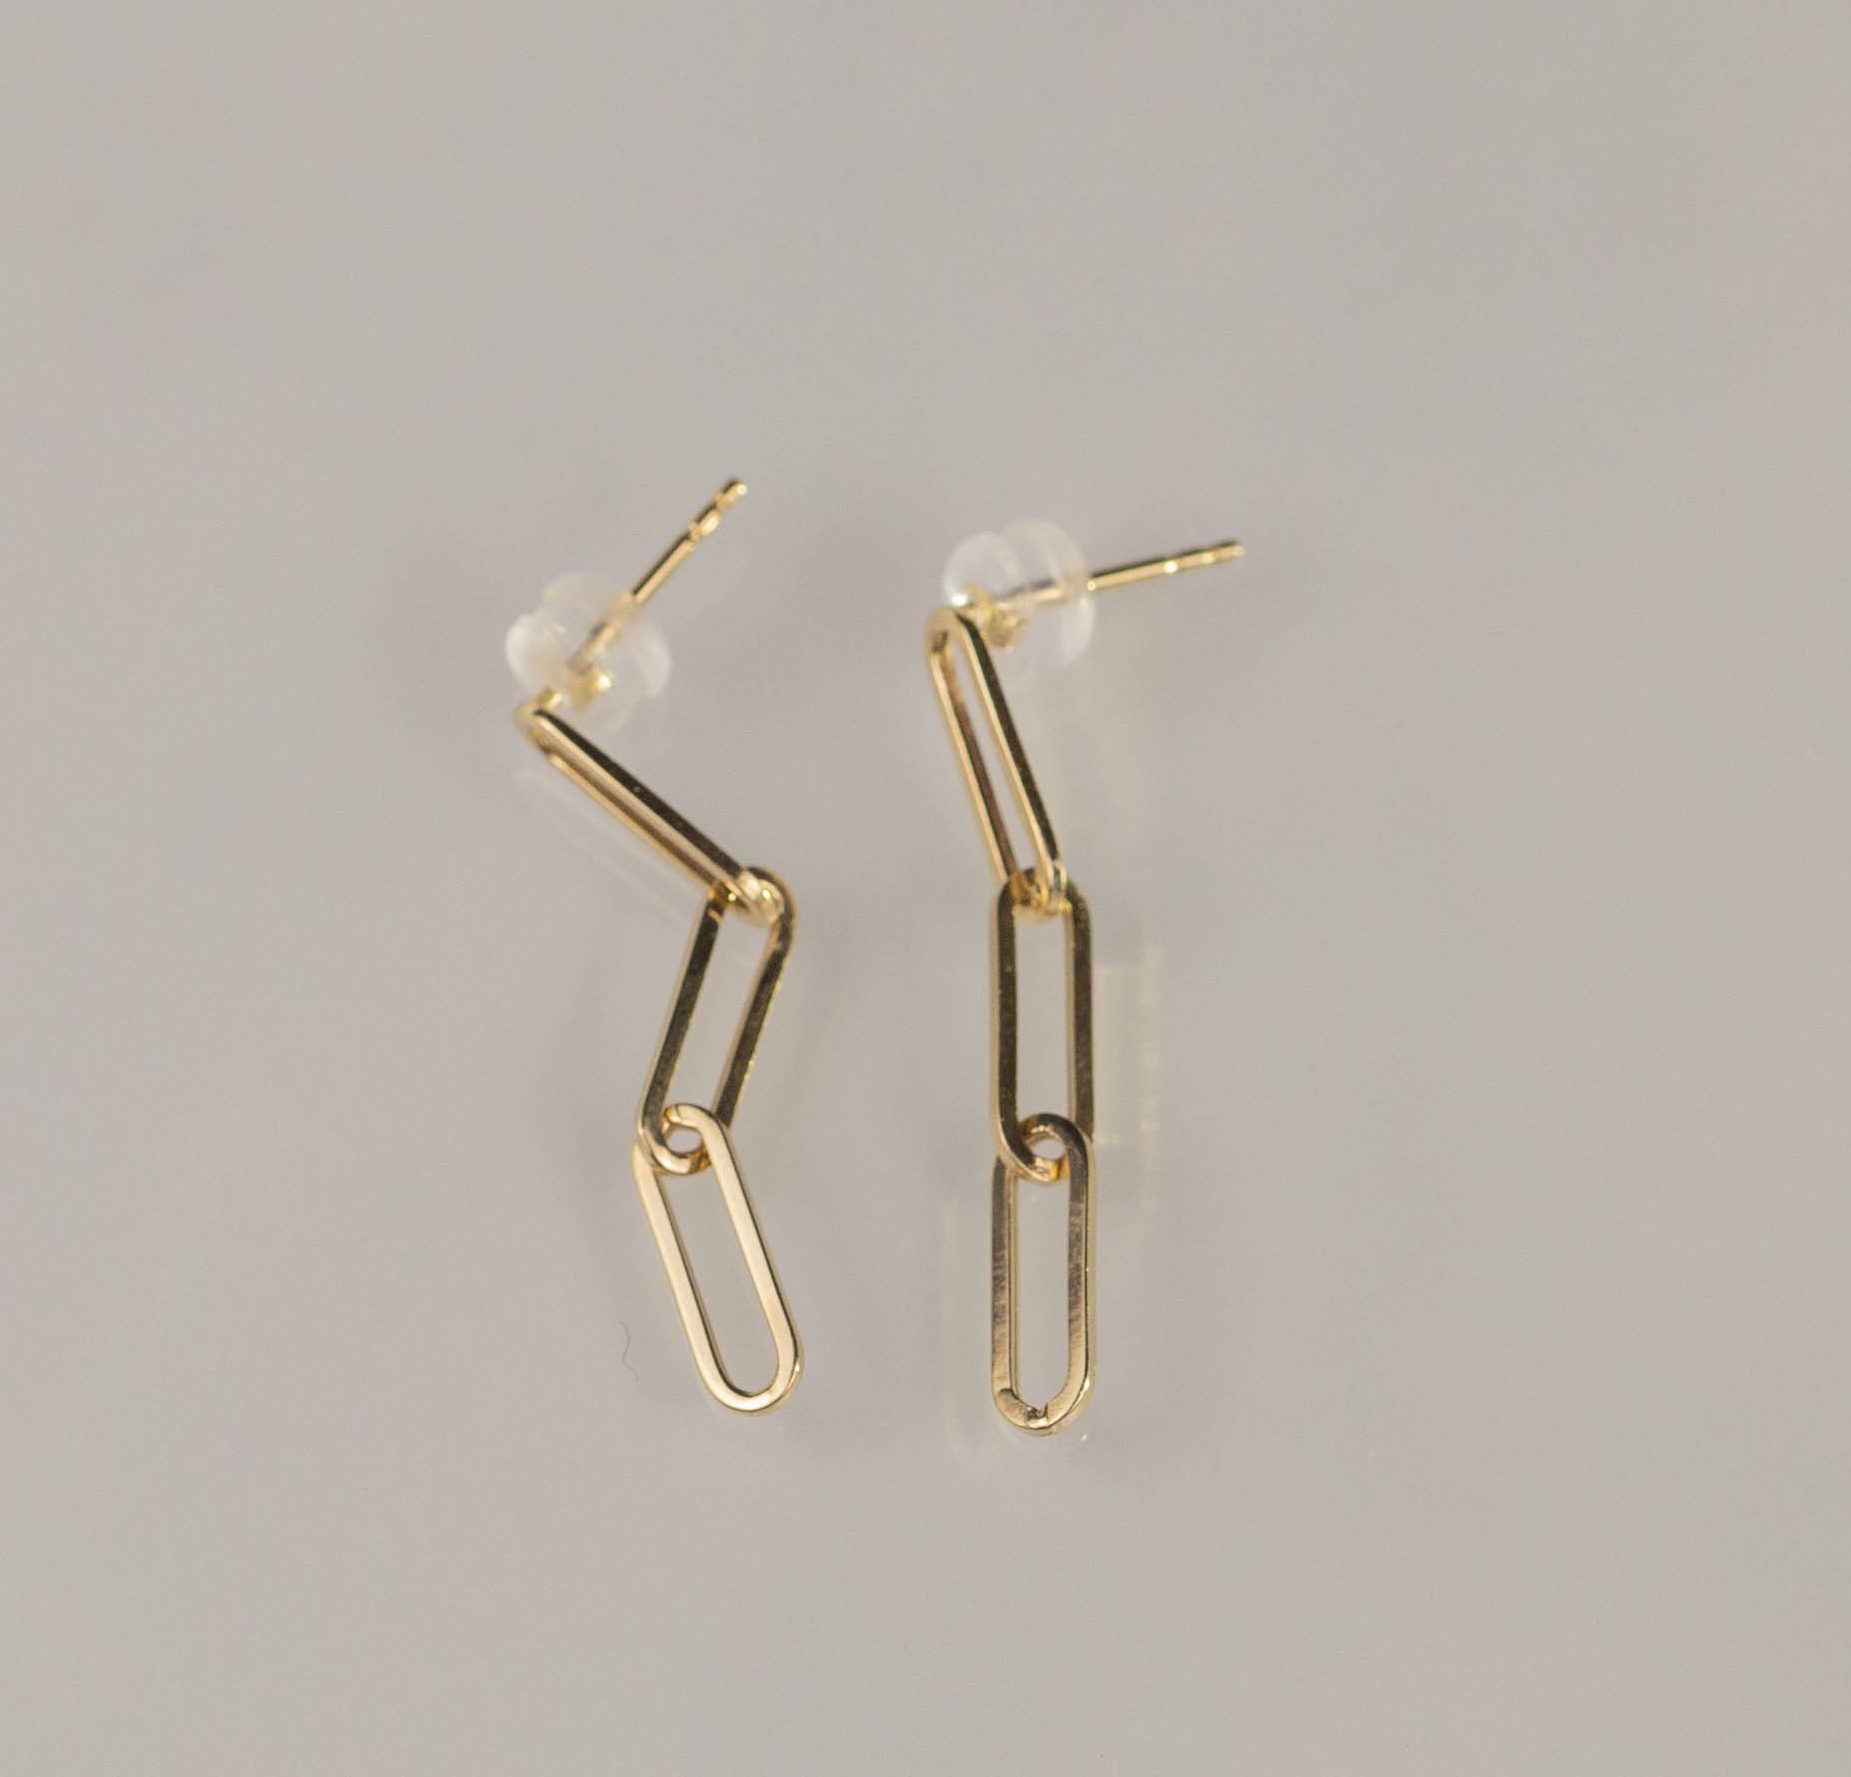 Linked Chain Earrings 18k Yellow Gold E789